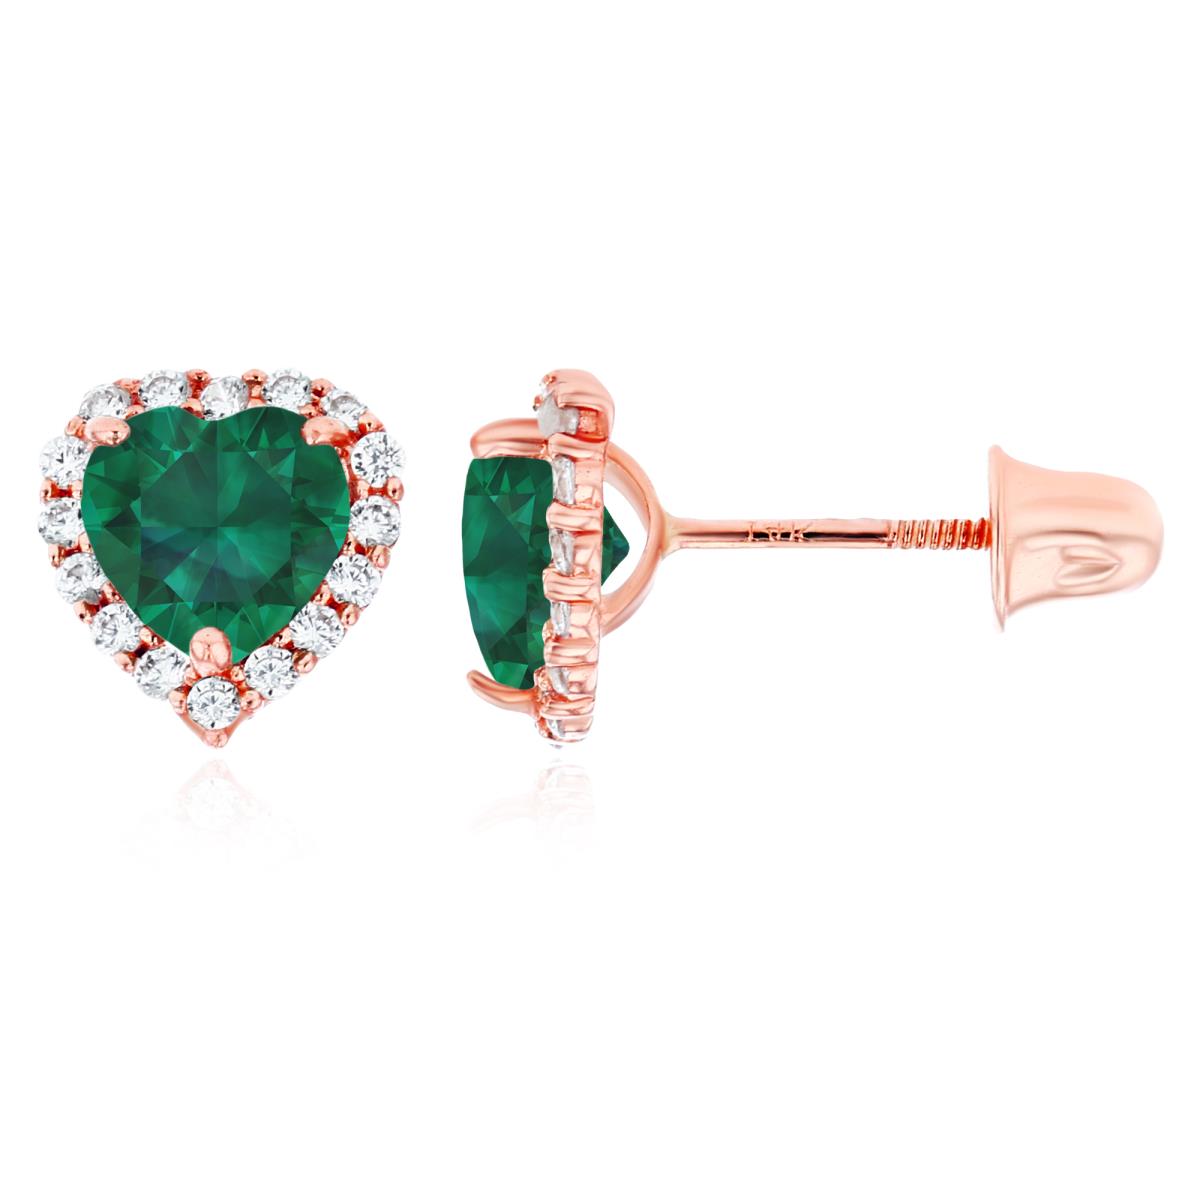 14K Rose Gold 5mm Heart Created Emerald & 1mm Created White Sapphire Halo Screwback Earrings